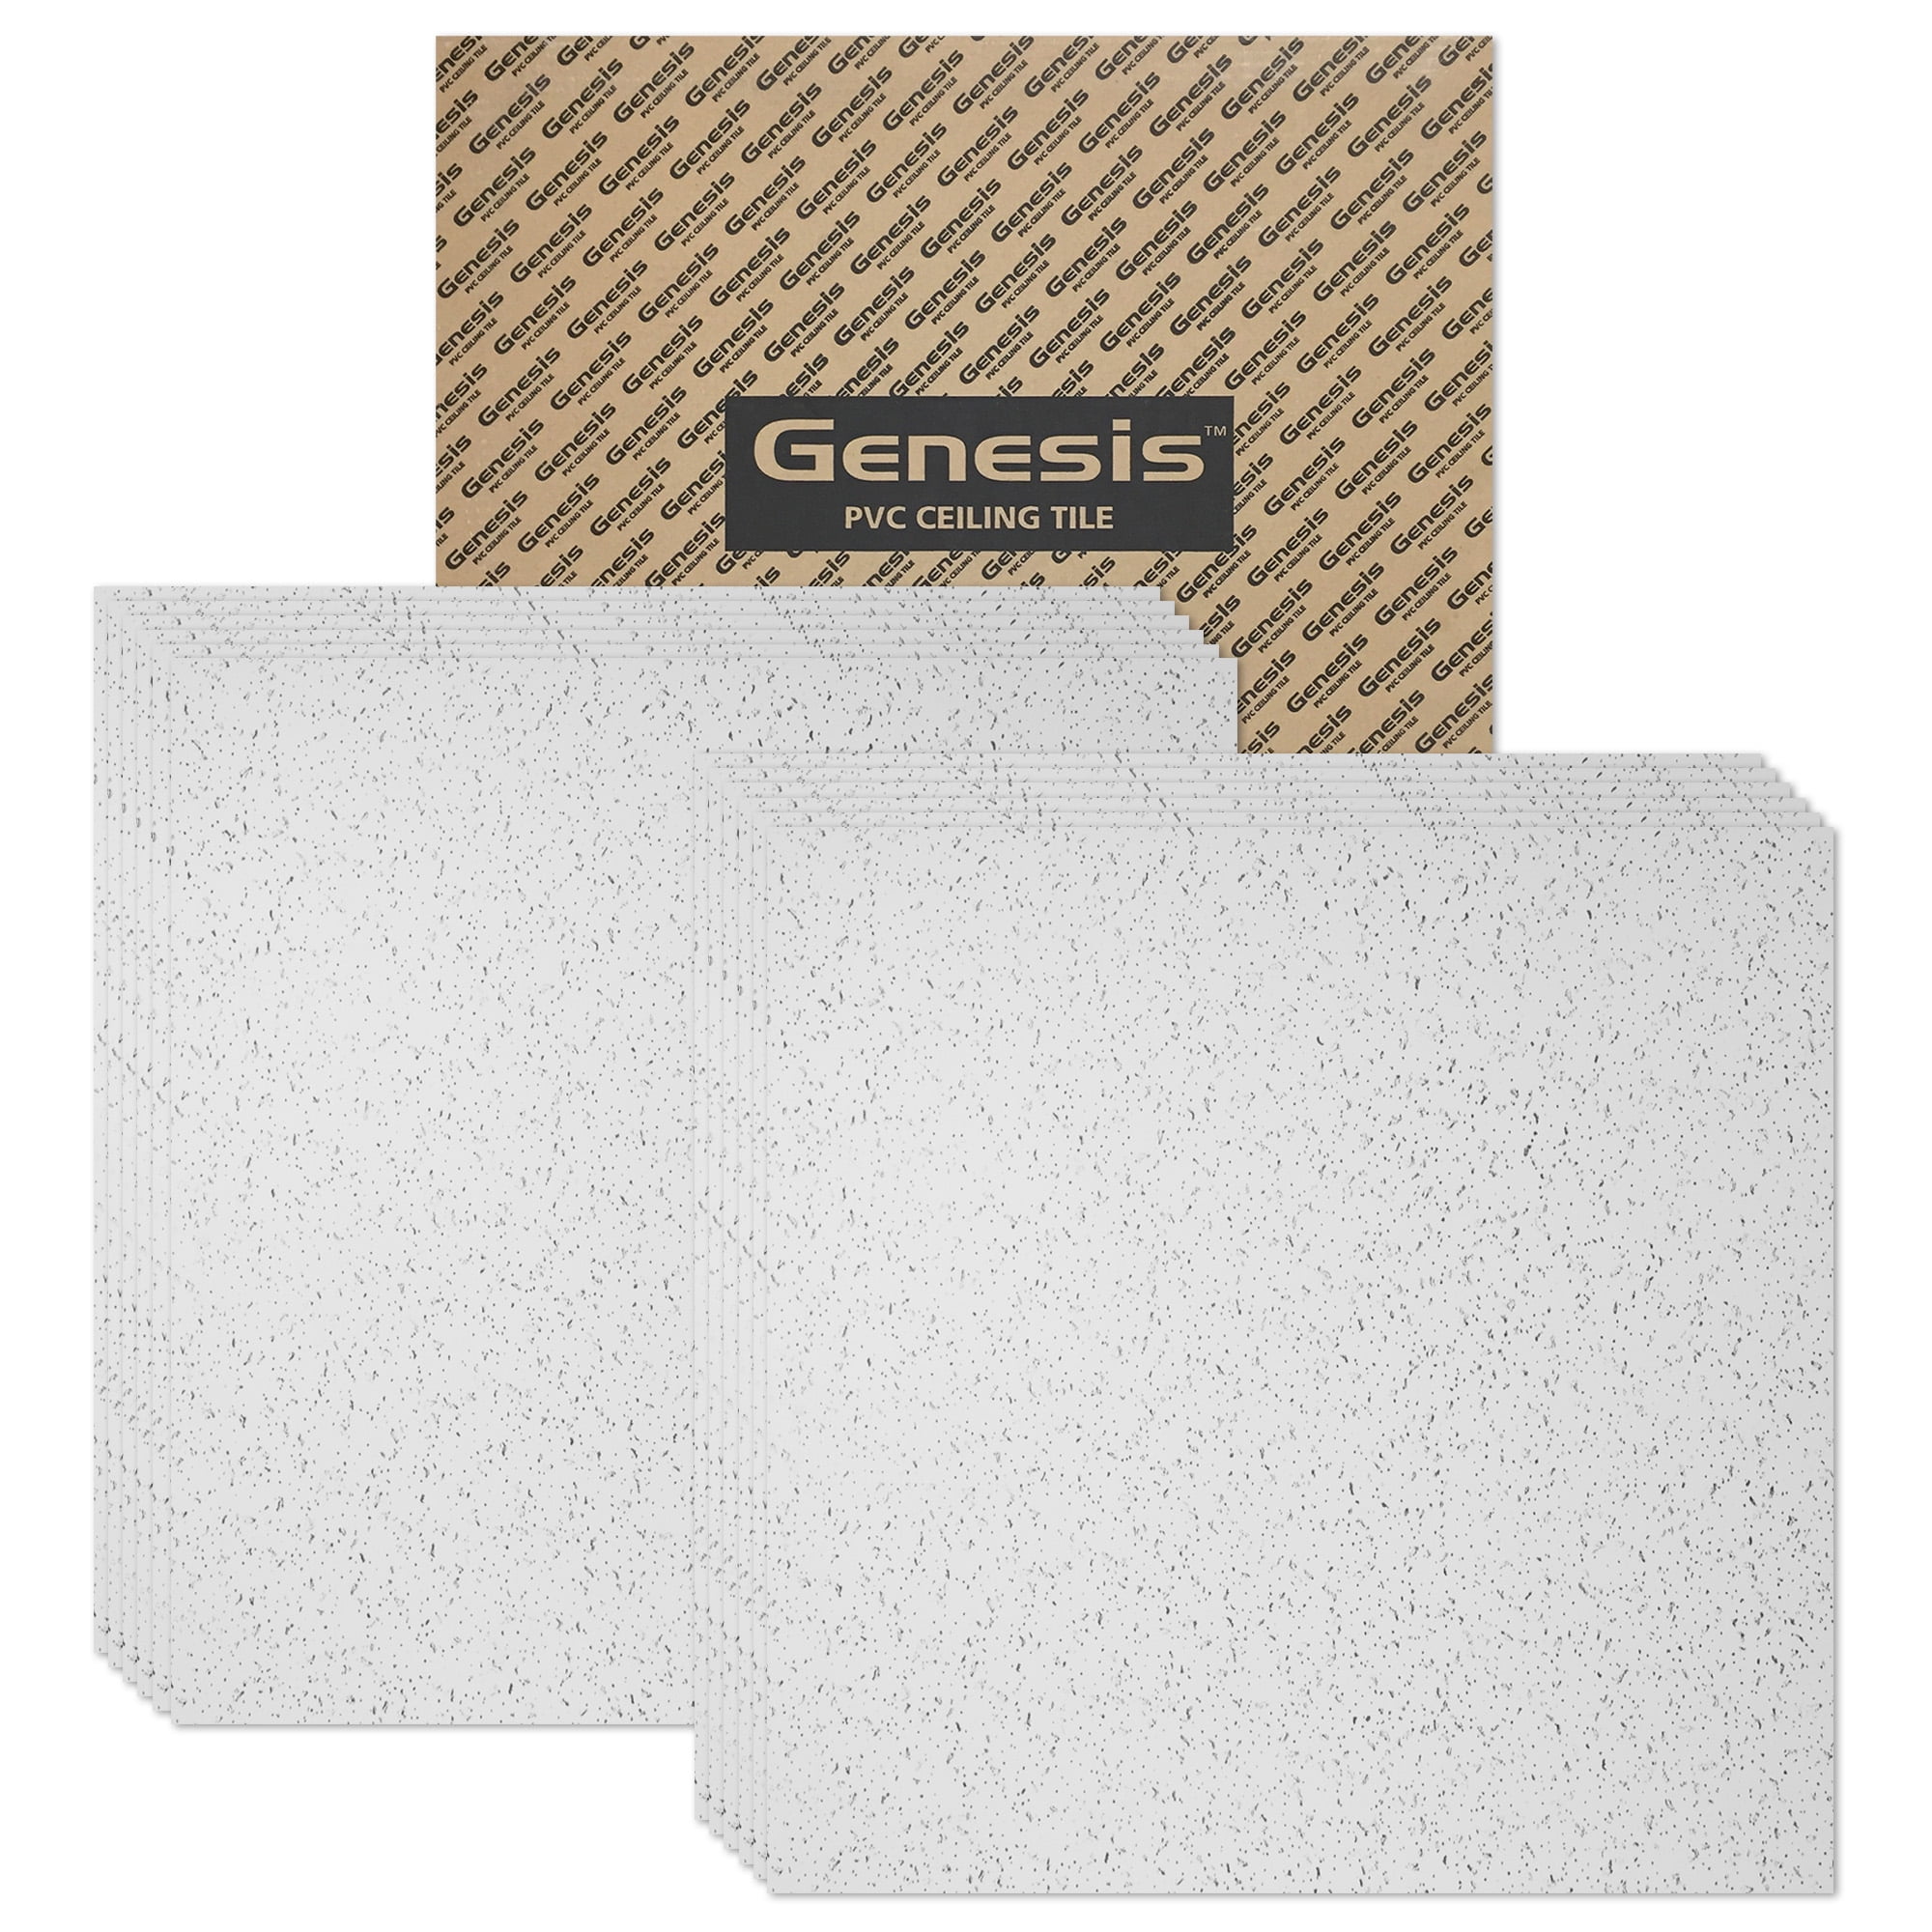 Genesis 2ft x 2ft Printed Pro Ceiling Tiles Easy Dropin Installation Waterproof, Washable